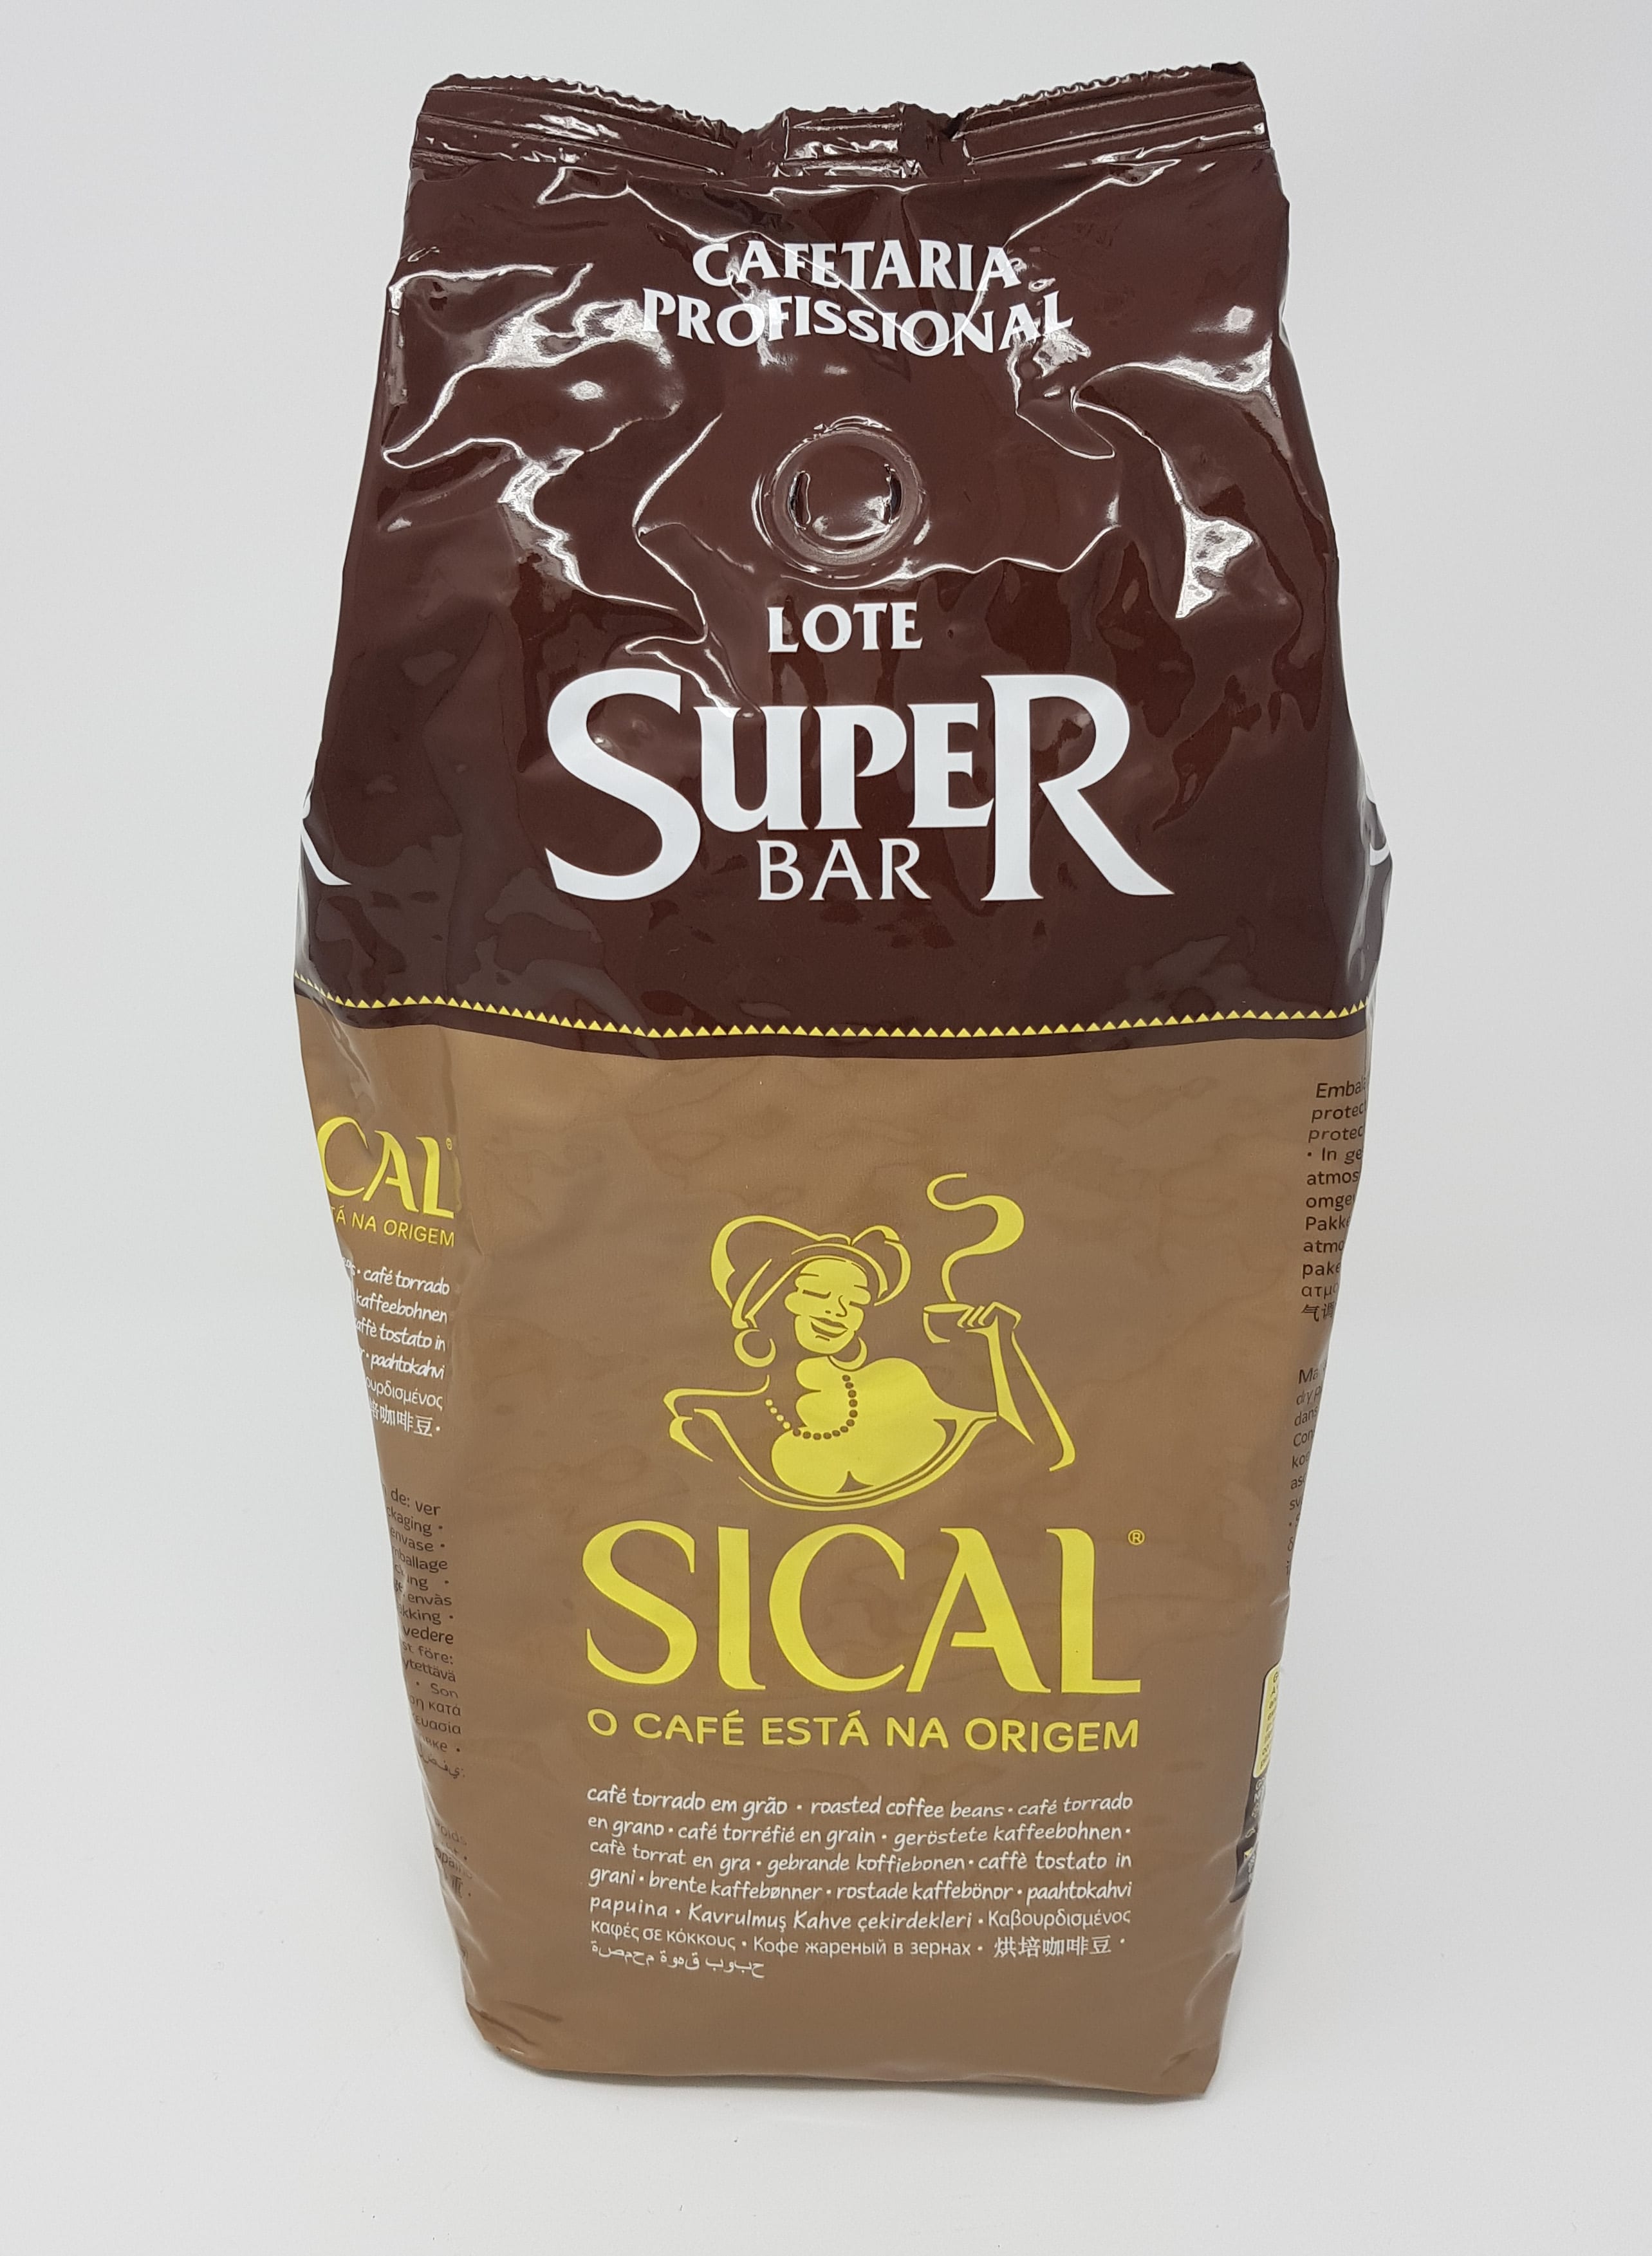 Sical Professional Portuguese coffee beans Lote Super Bar